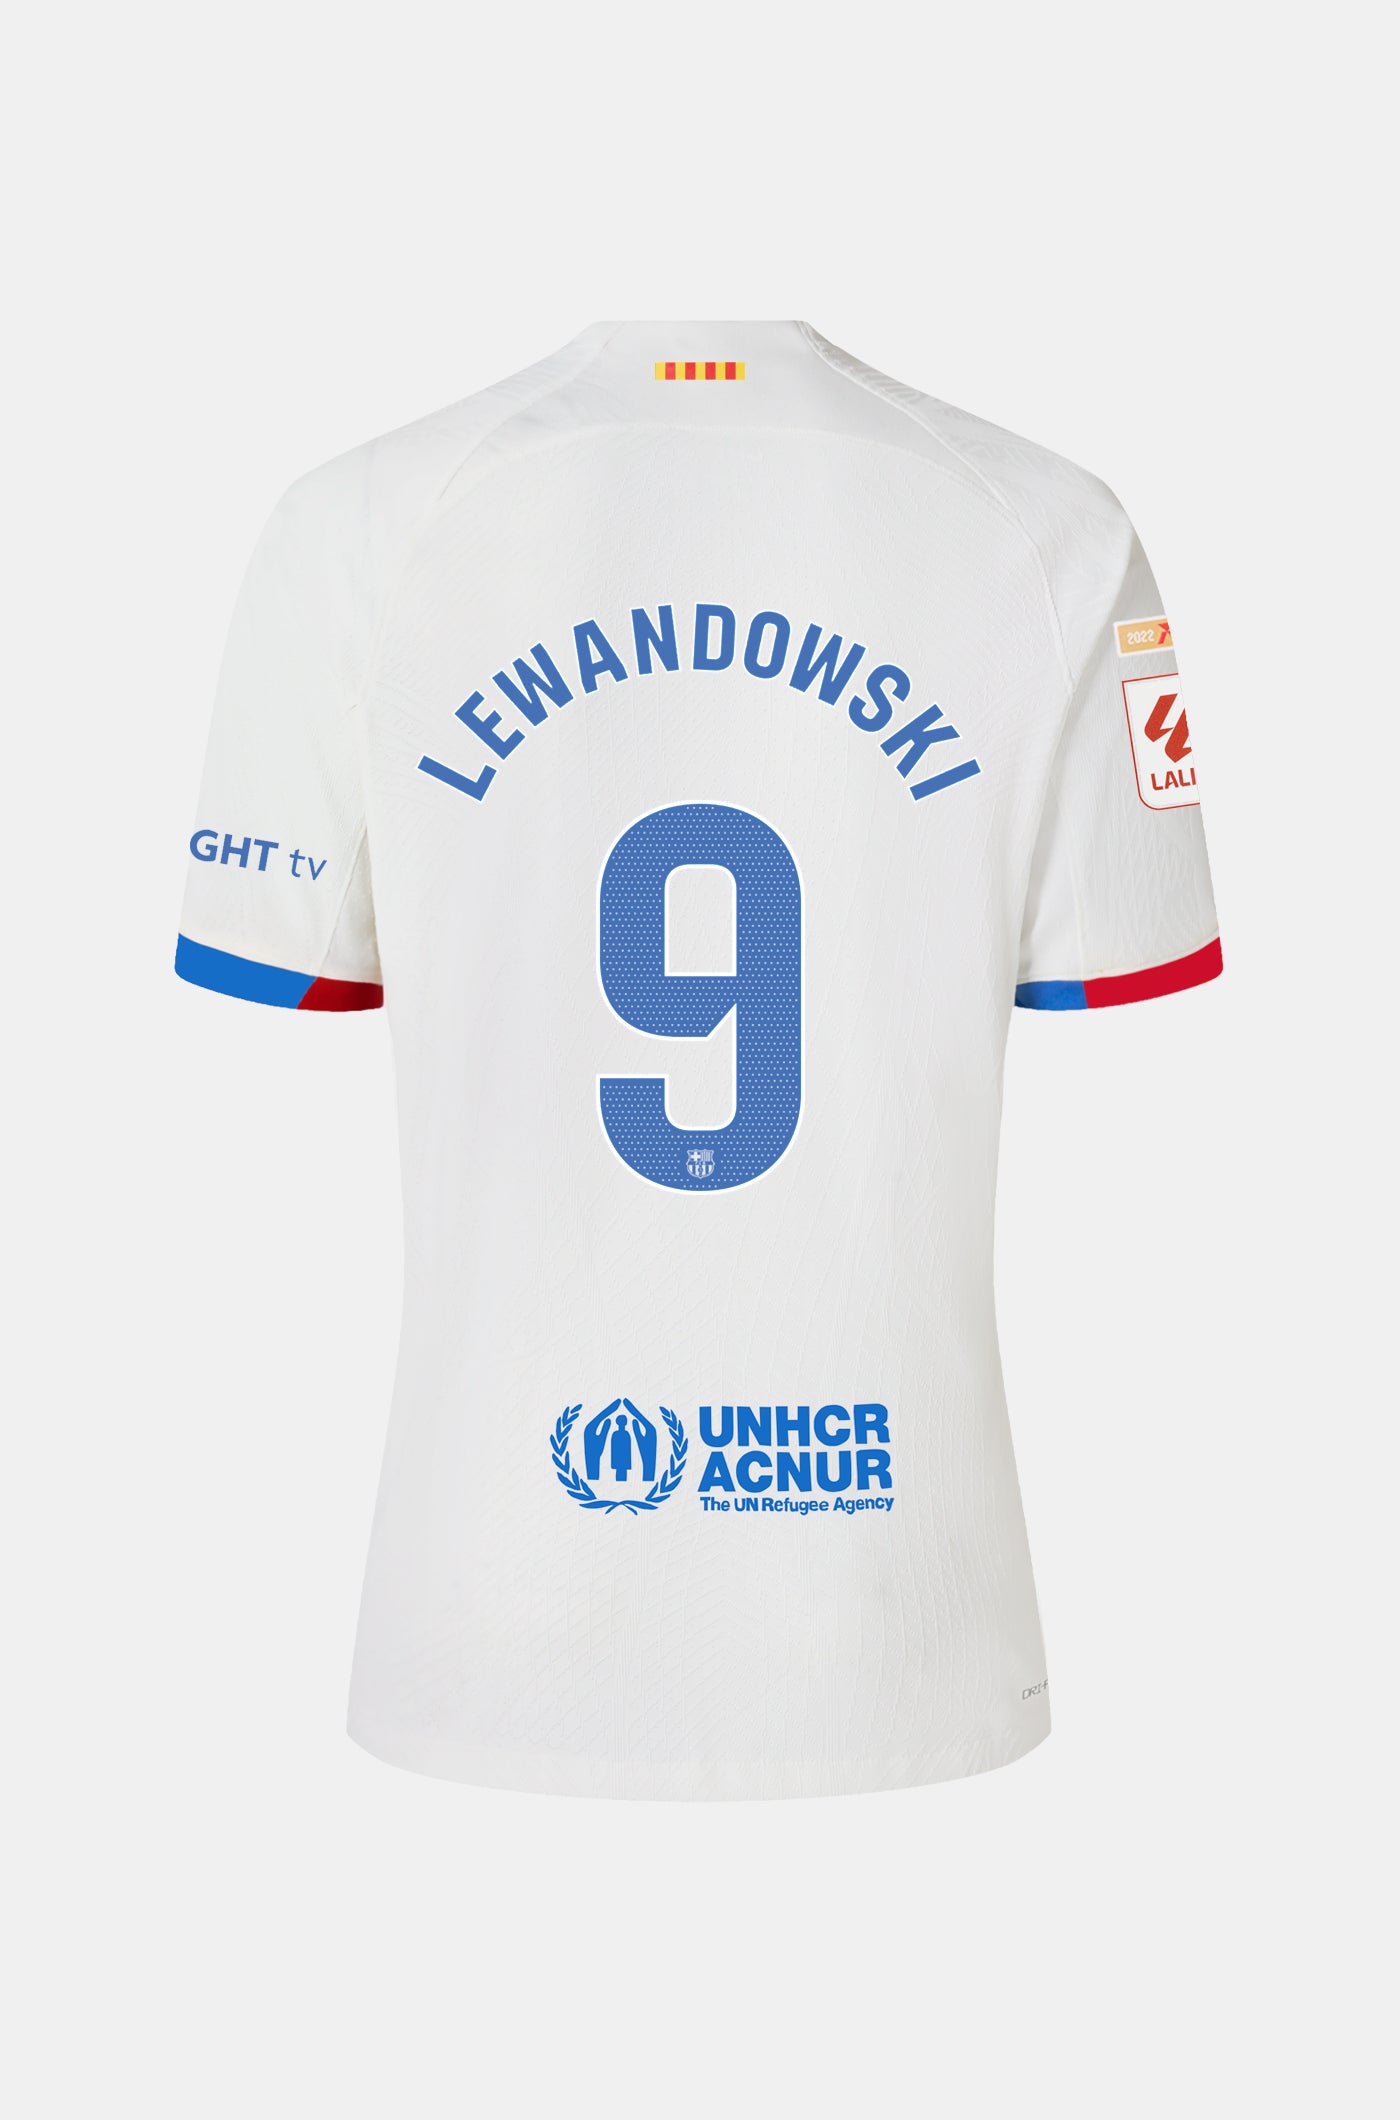 LFP FC Barcelona away shirt 23/24 Player’s Edition  - LEWANDOWSKI